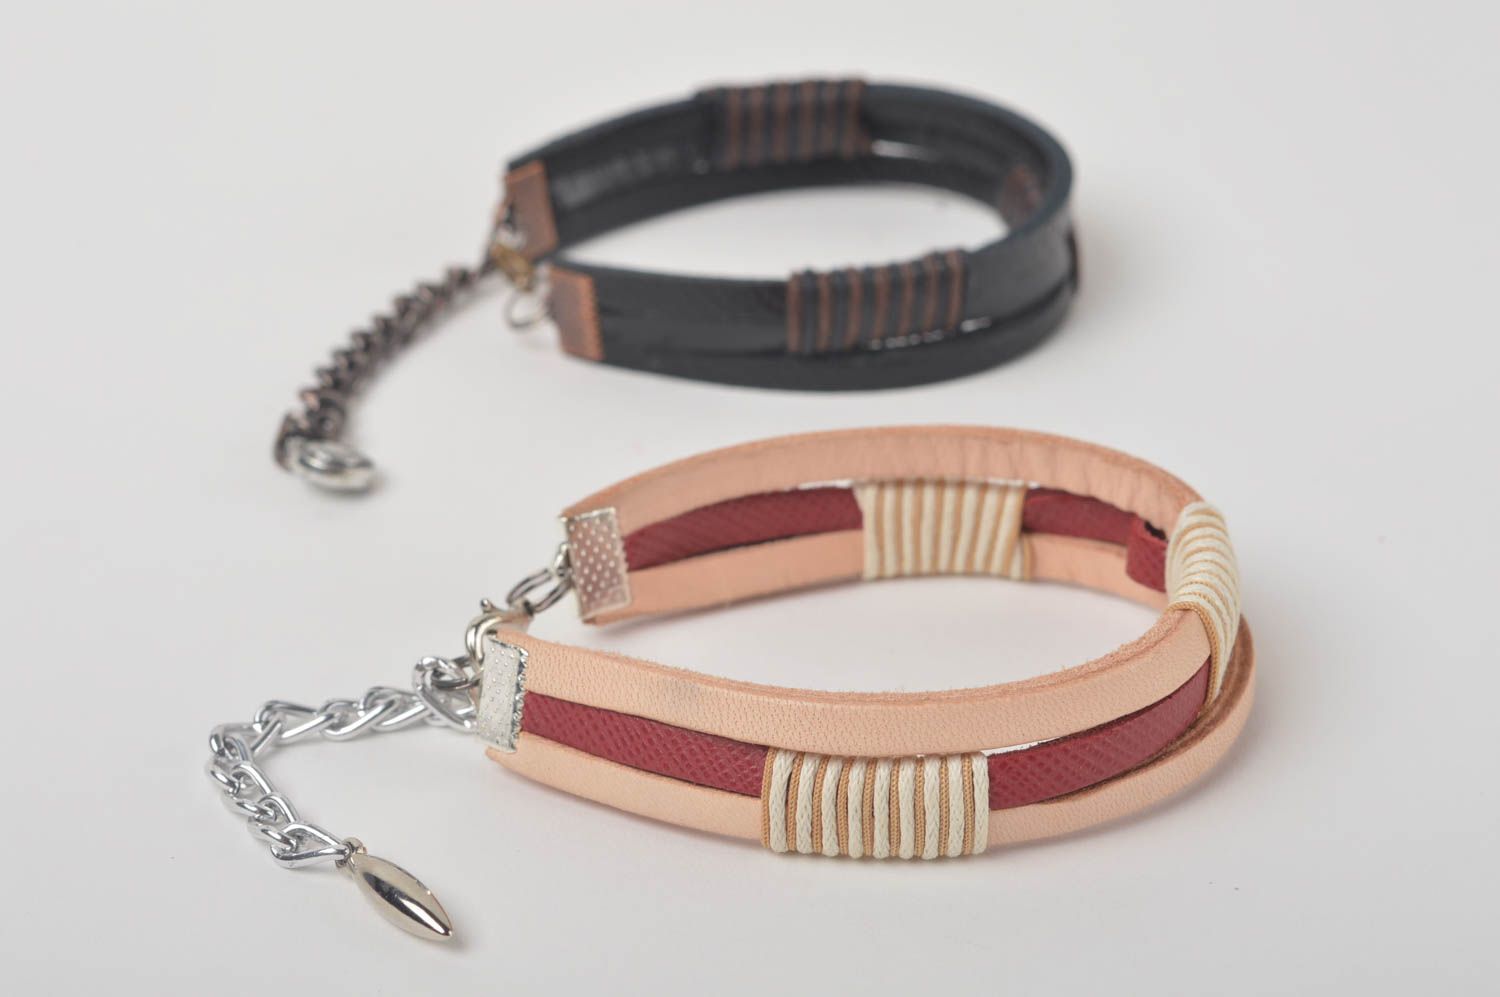 Unusual handmade leather bracelets wrist bracelet designs 2 pieces cool jewelry photo 2